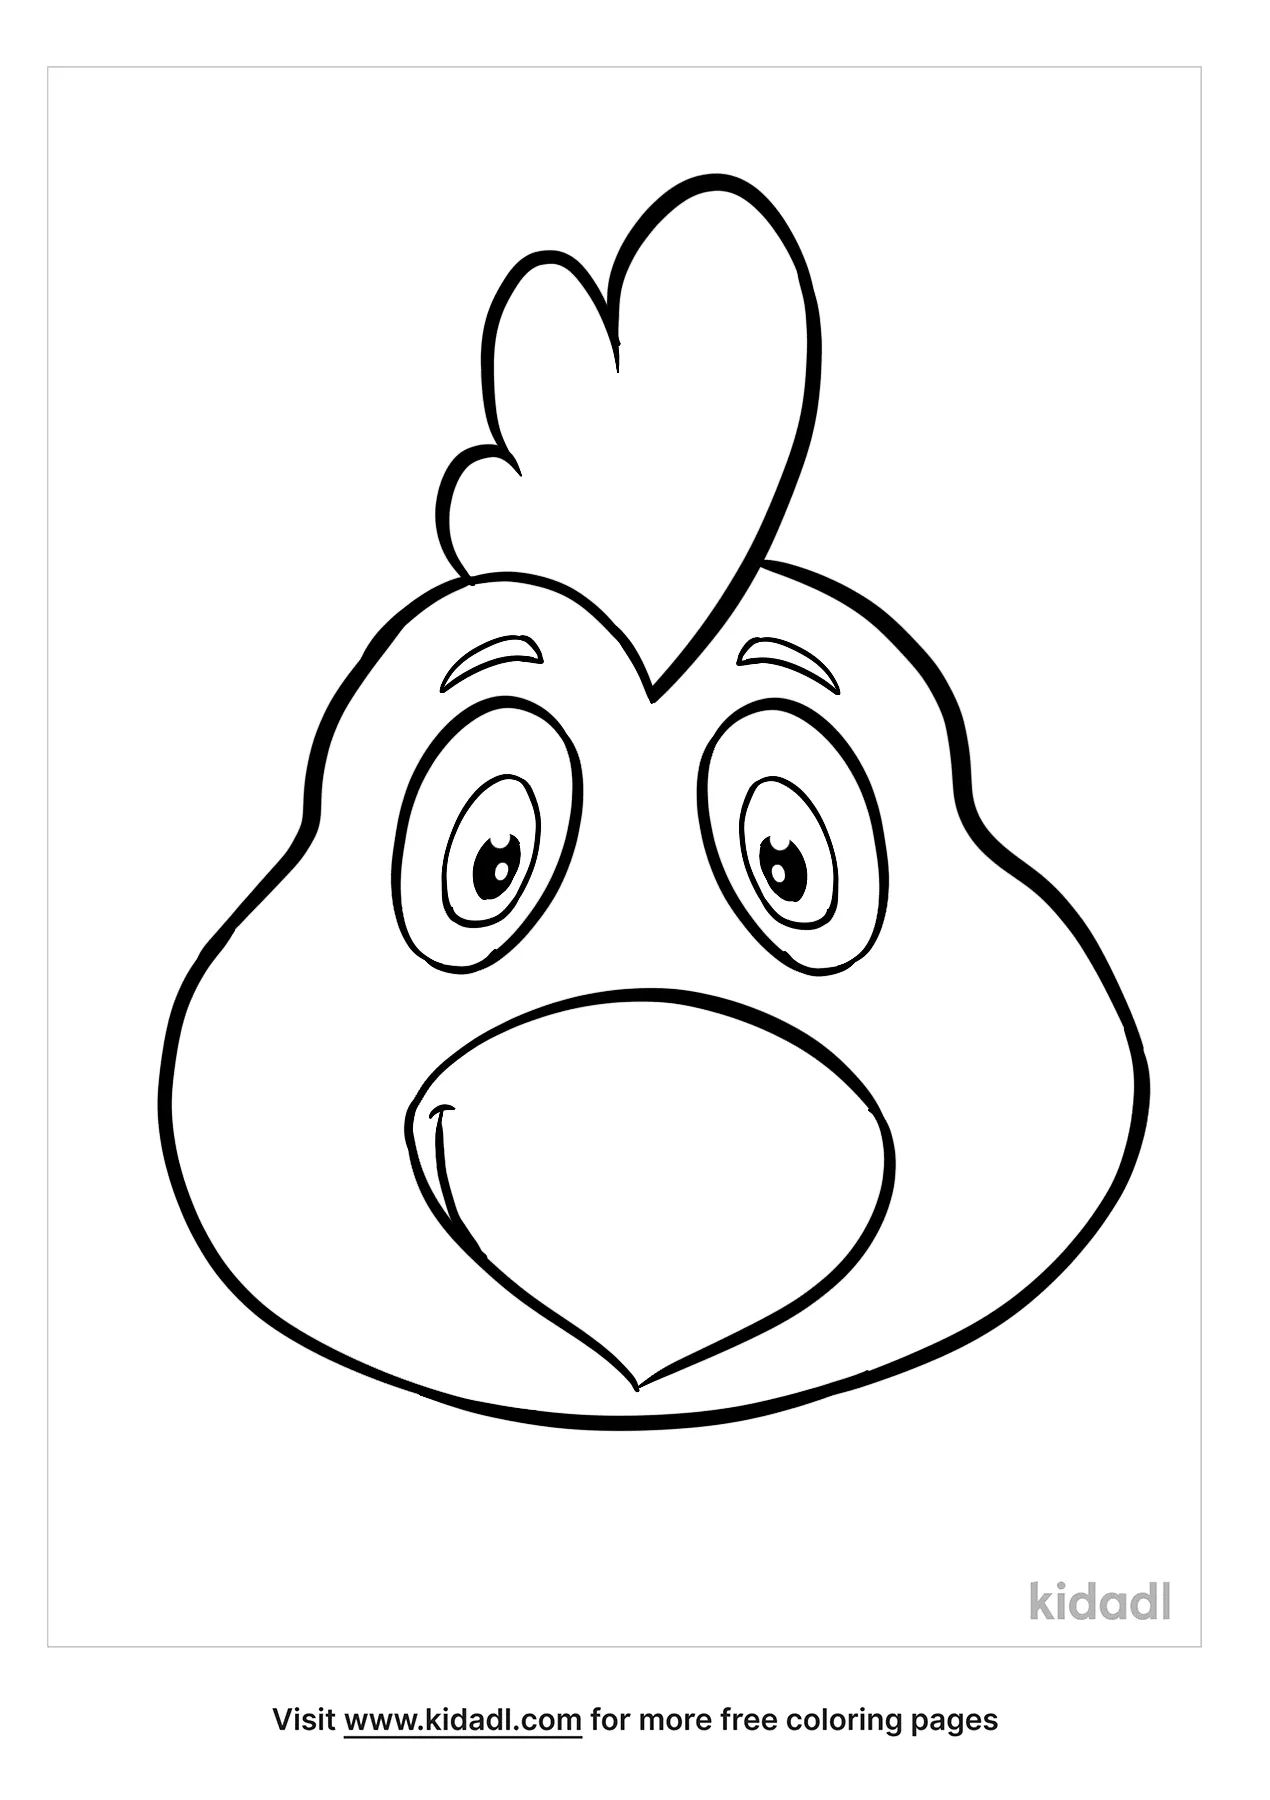 Free Chicken Cartoon Head Coloring Page | Coloring Page Printables | Kidadl